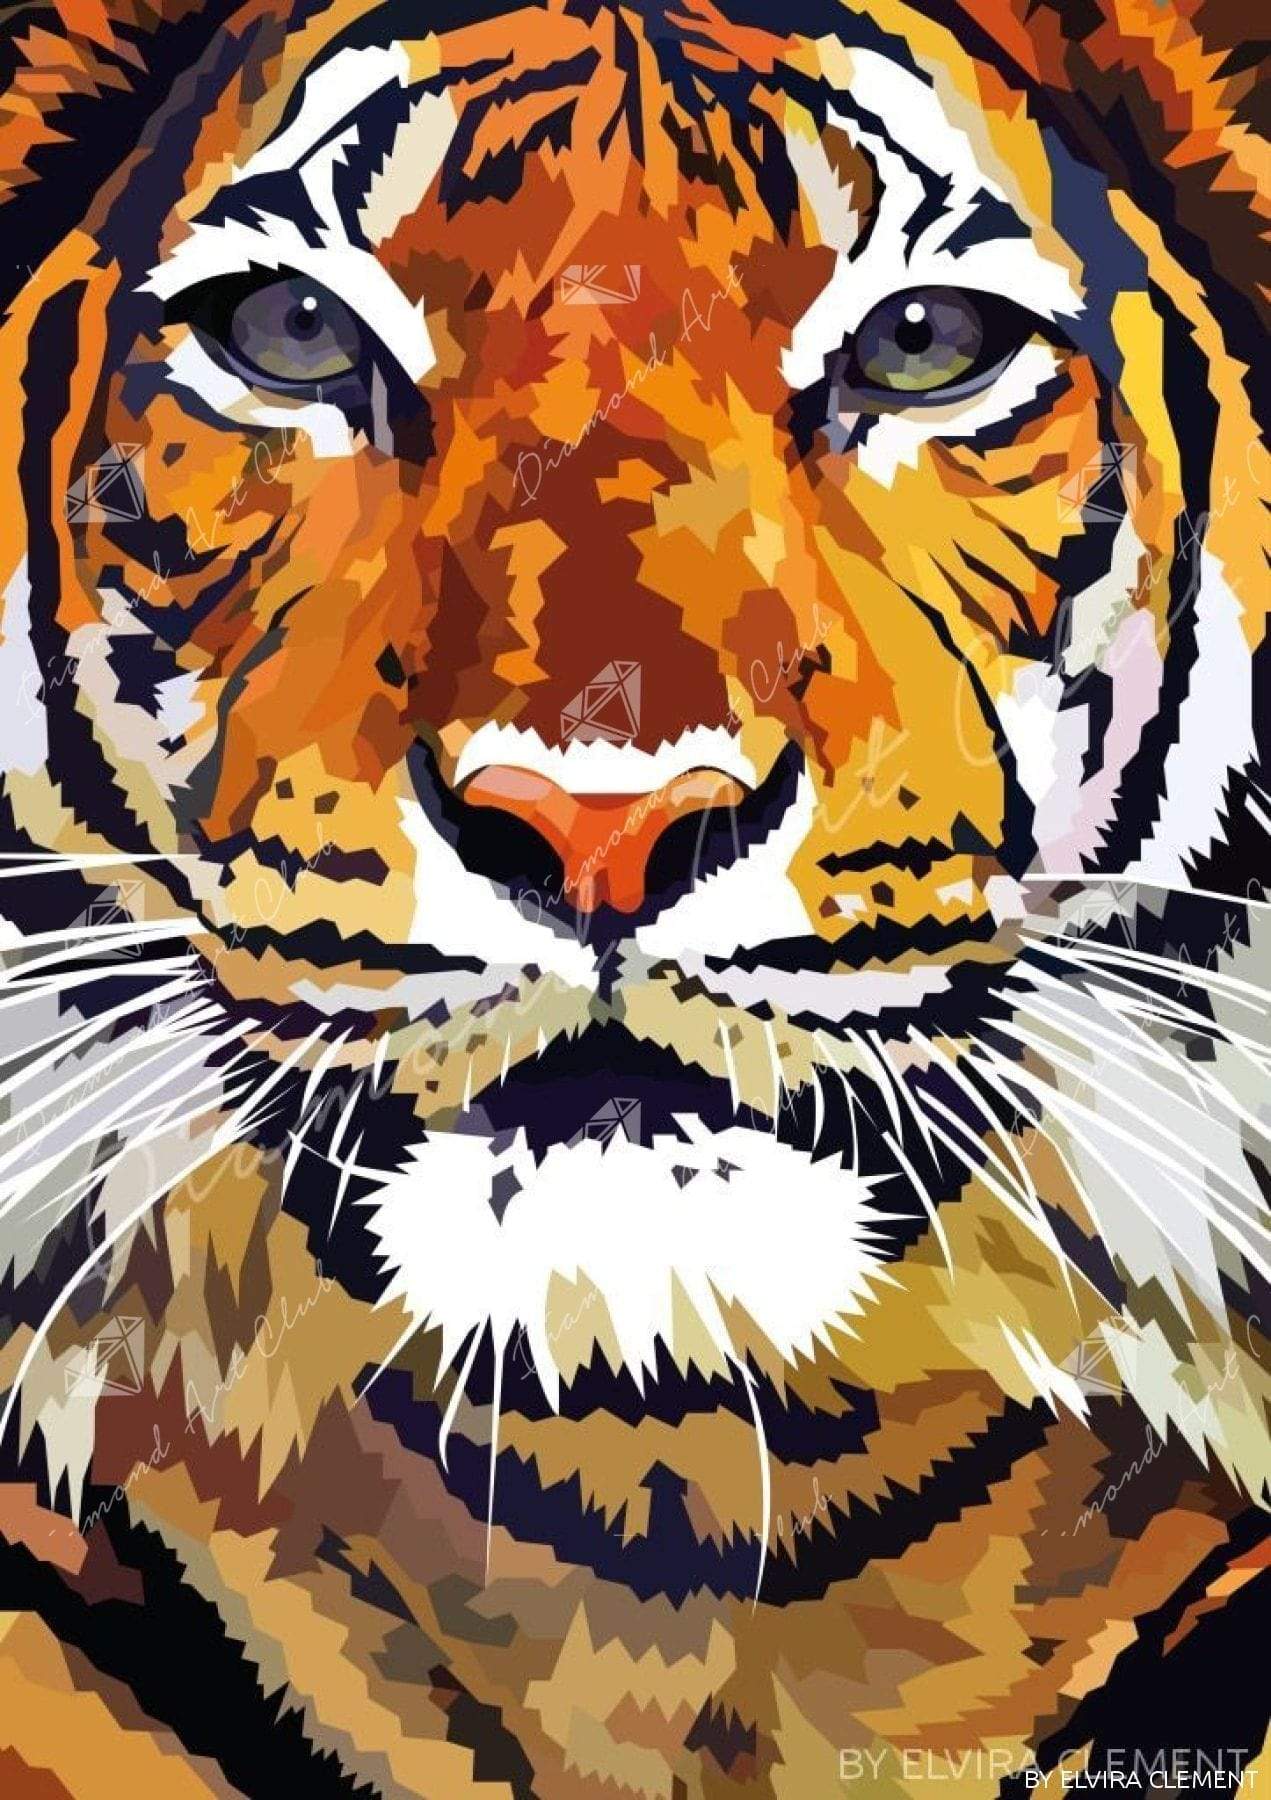 Diamond Painting Tiger Closeup Round With Aurora Borealis Accents / 7.9" x 11.0" (20cm x 28cm) / 24 Colors including 1 AB